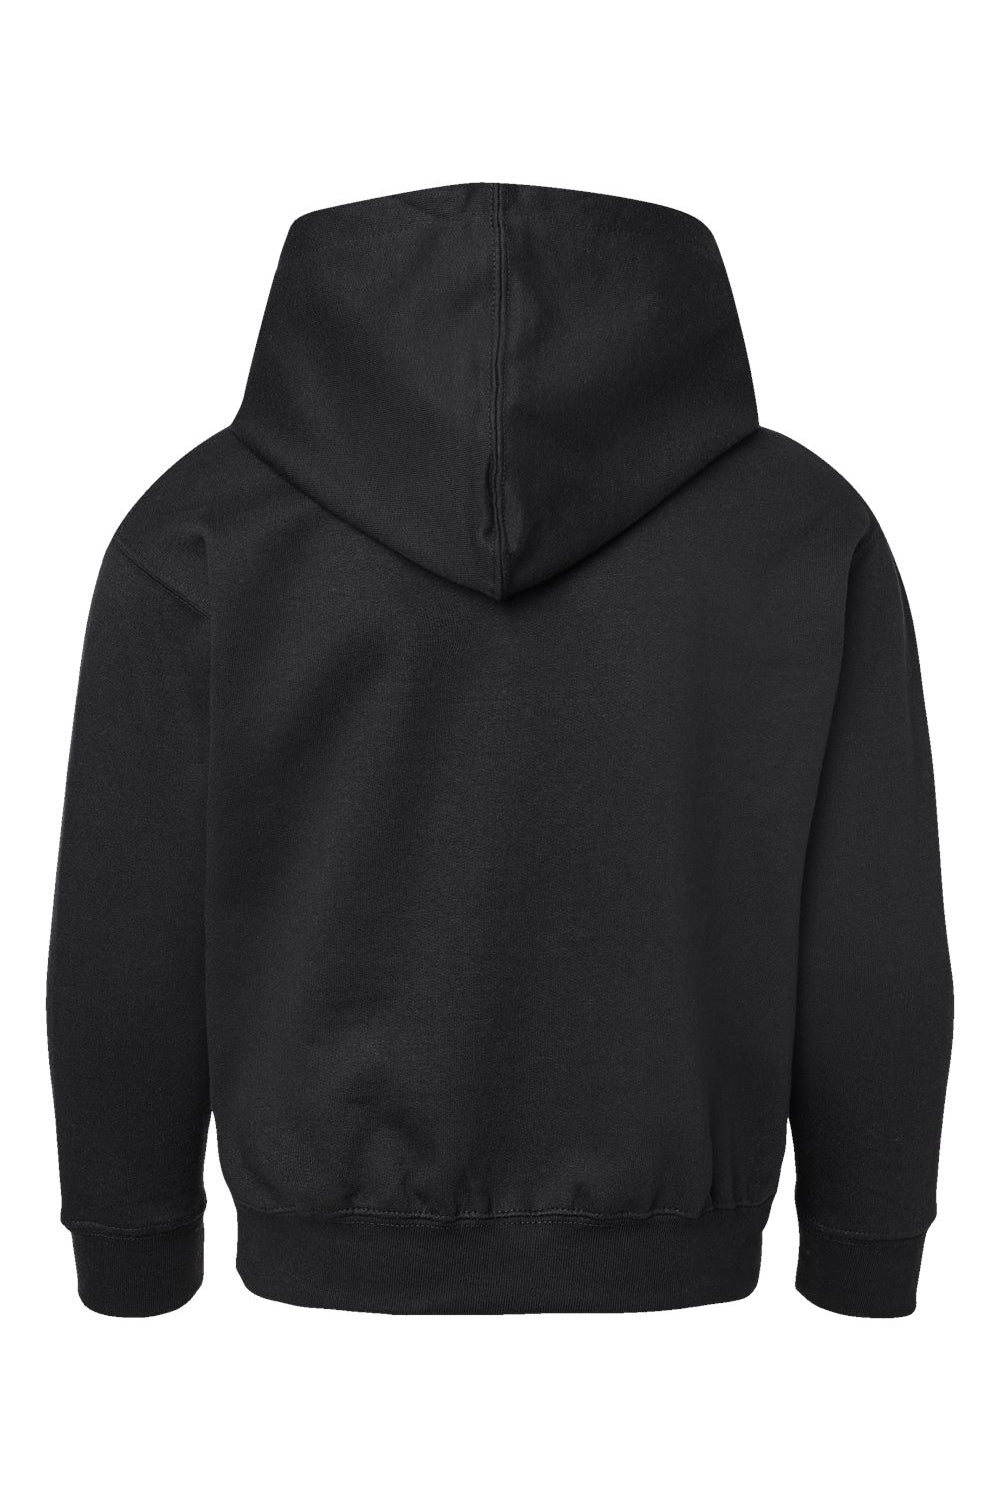 LAT 2296 Youth Fleece Hooded Sweatshirt Hoodie Black Flat Back